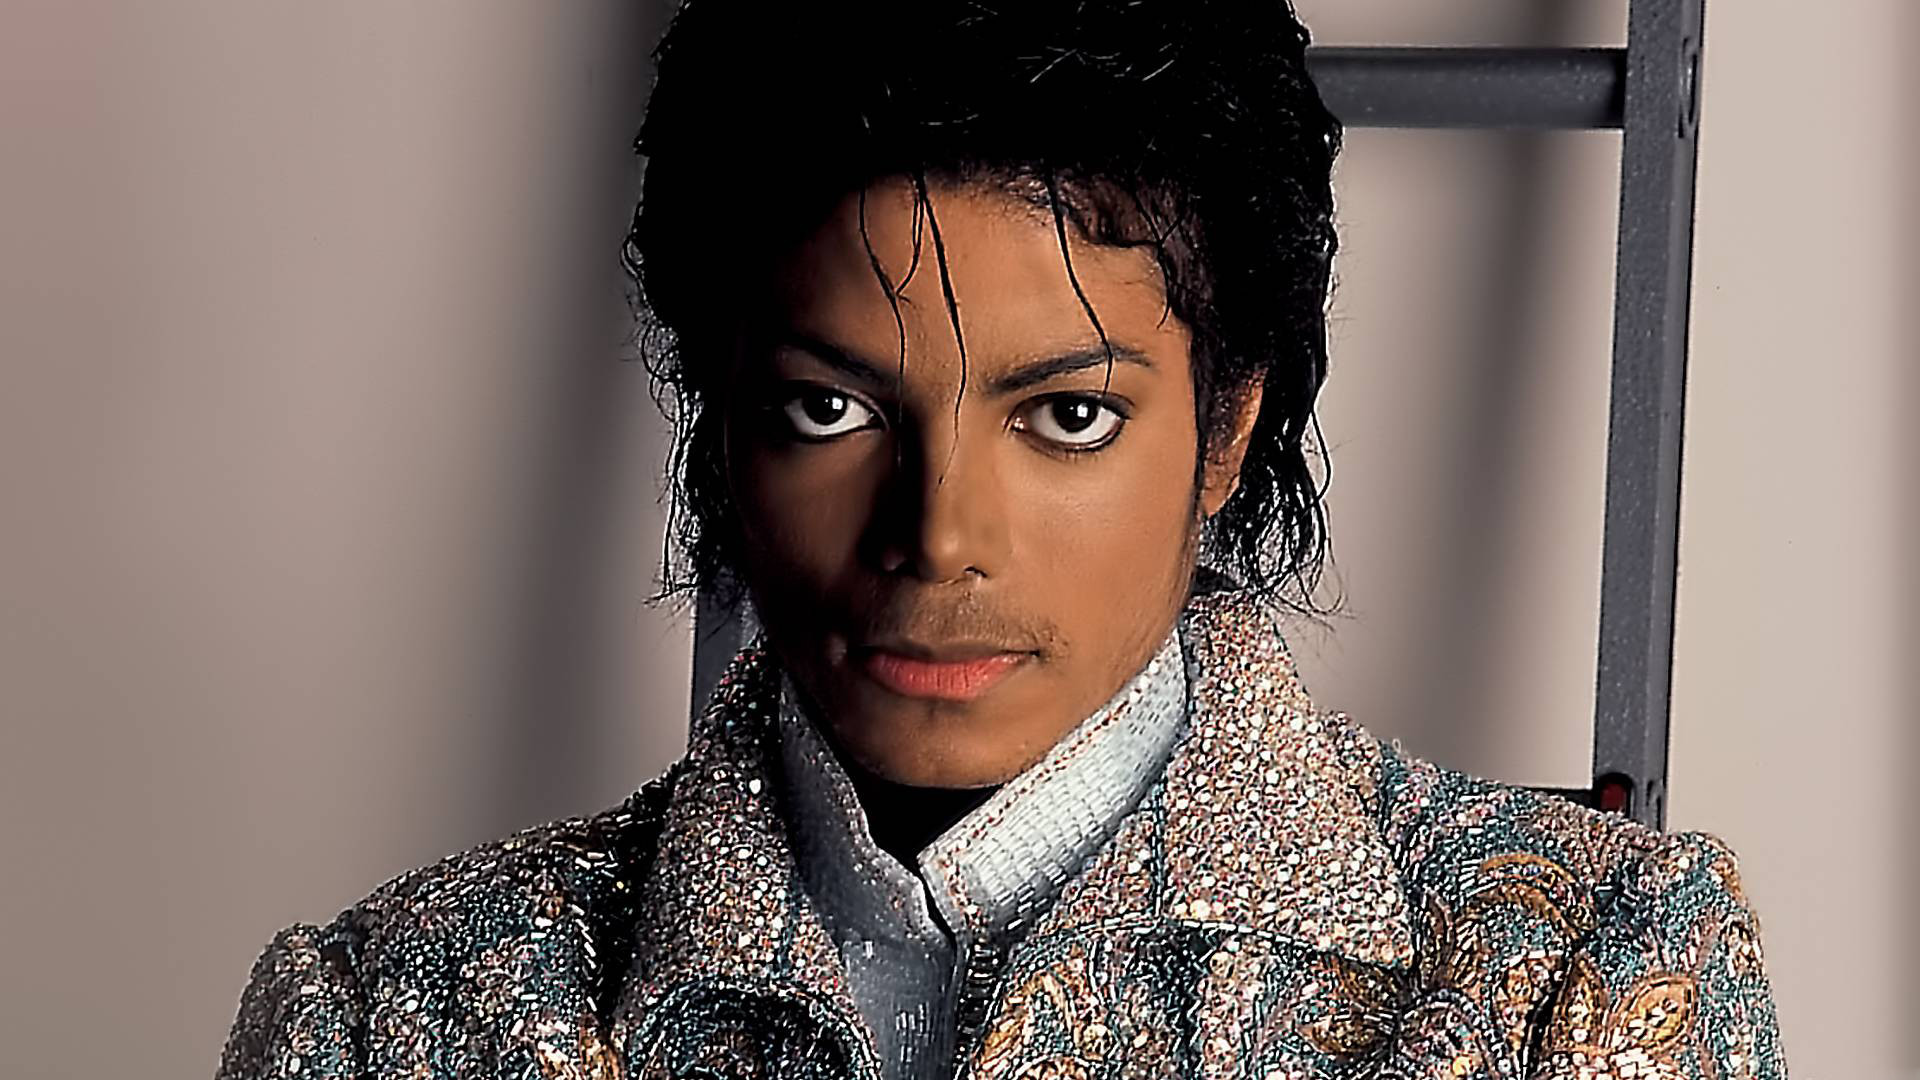 1920x1080 Michael Jackson wallpaper hhalimaa 1920 1080.